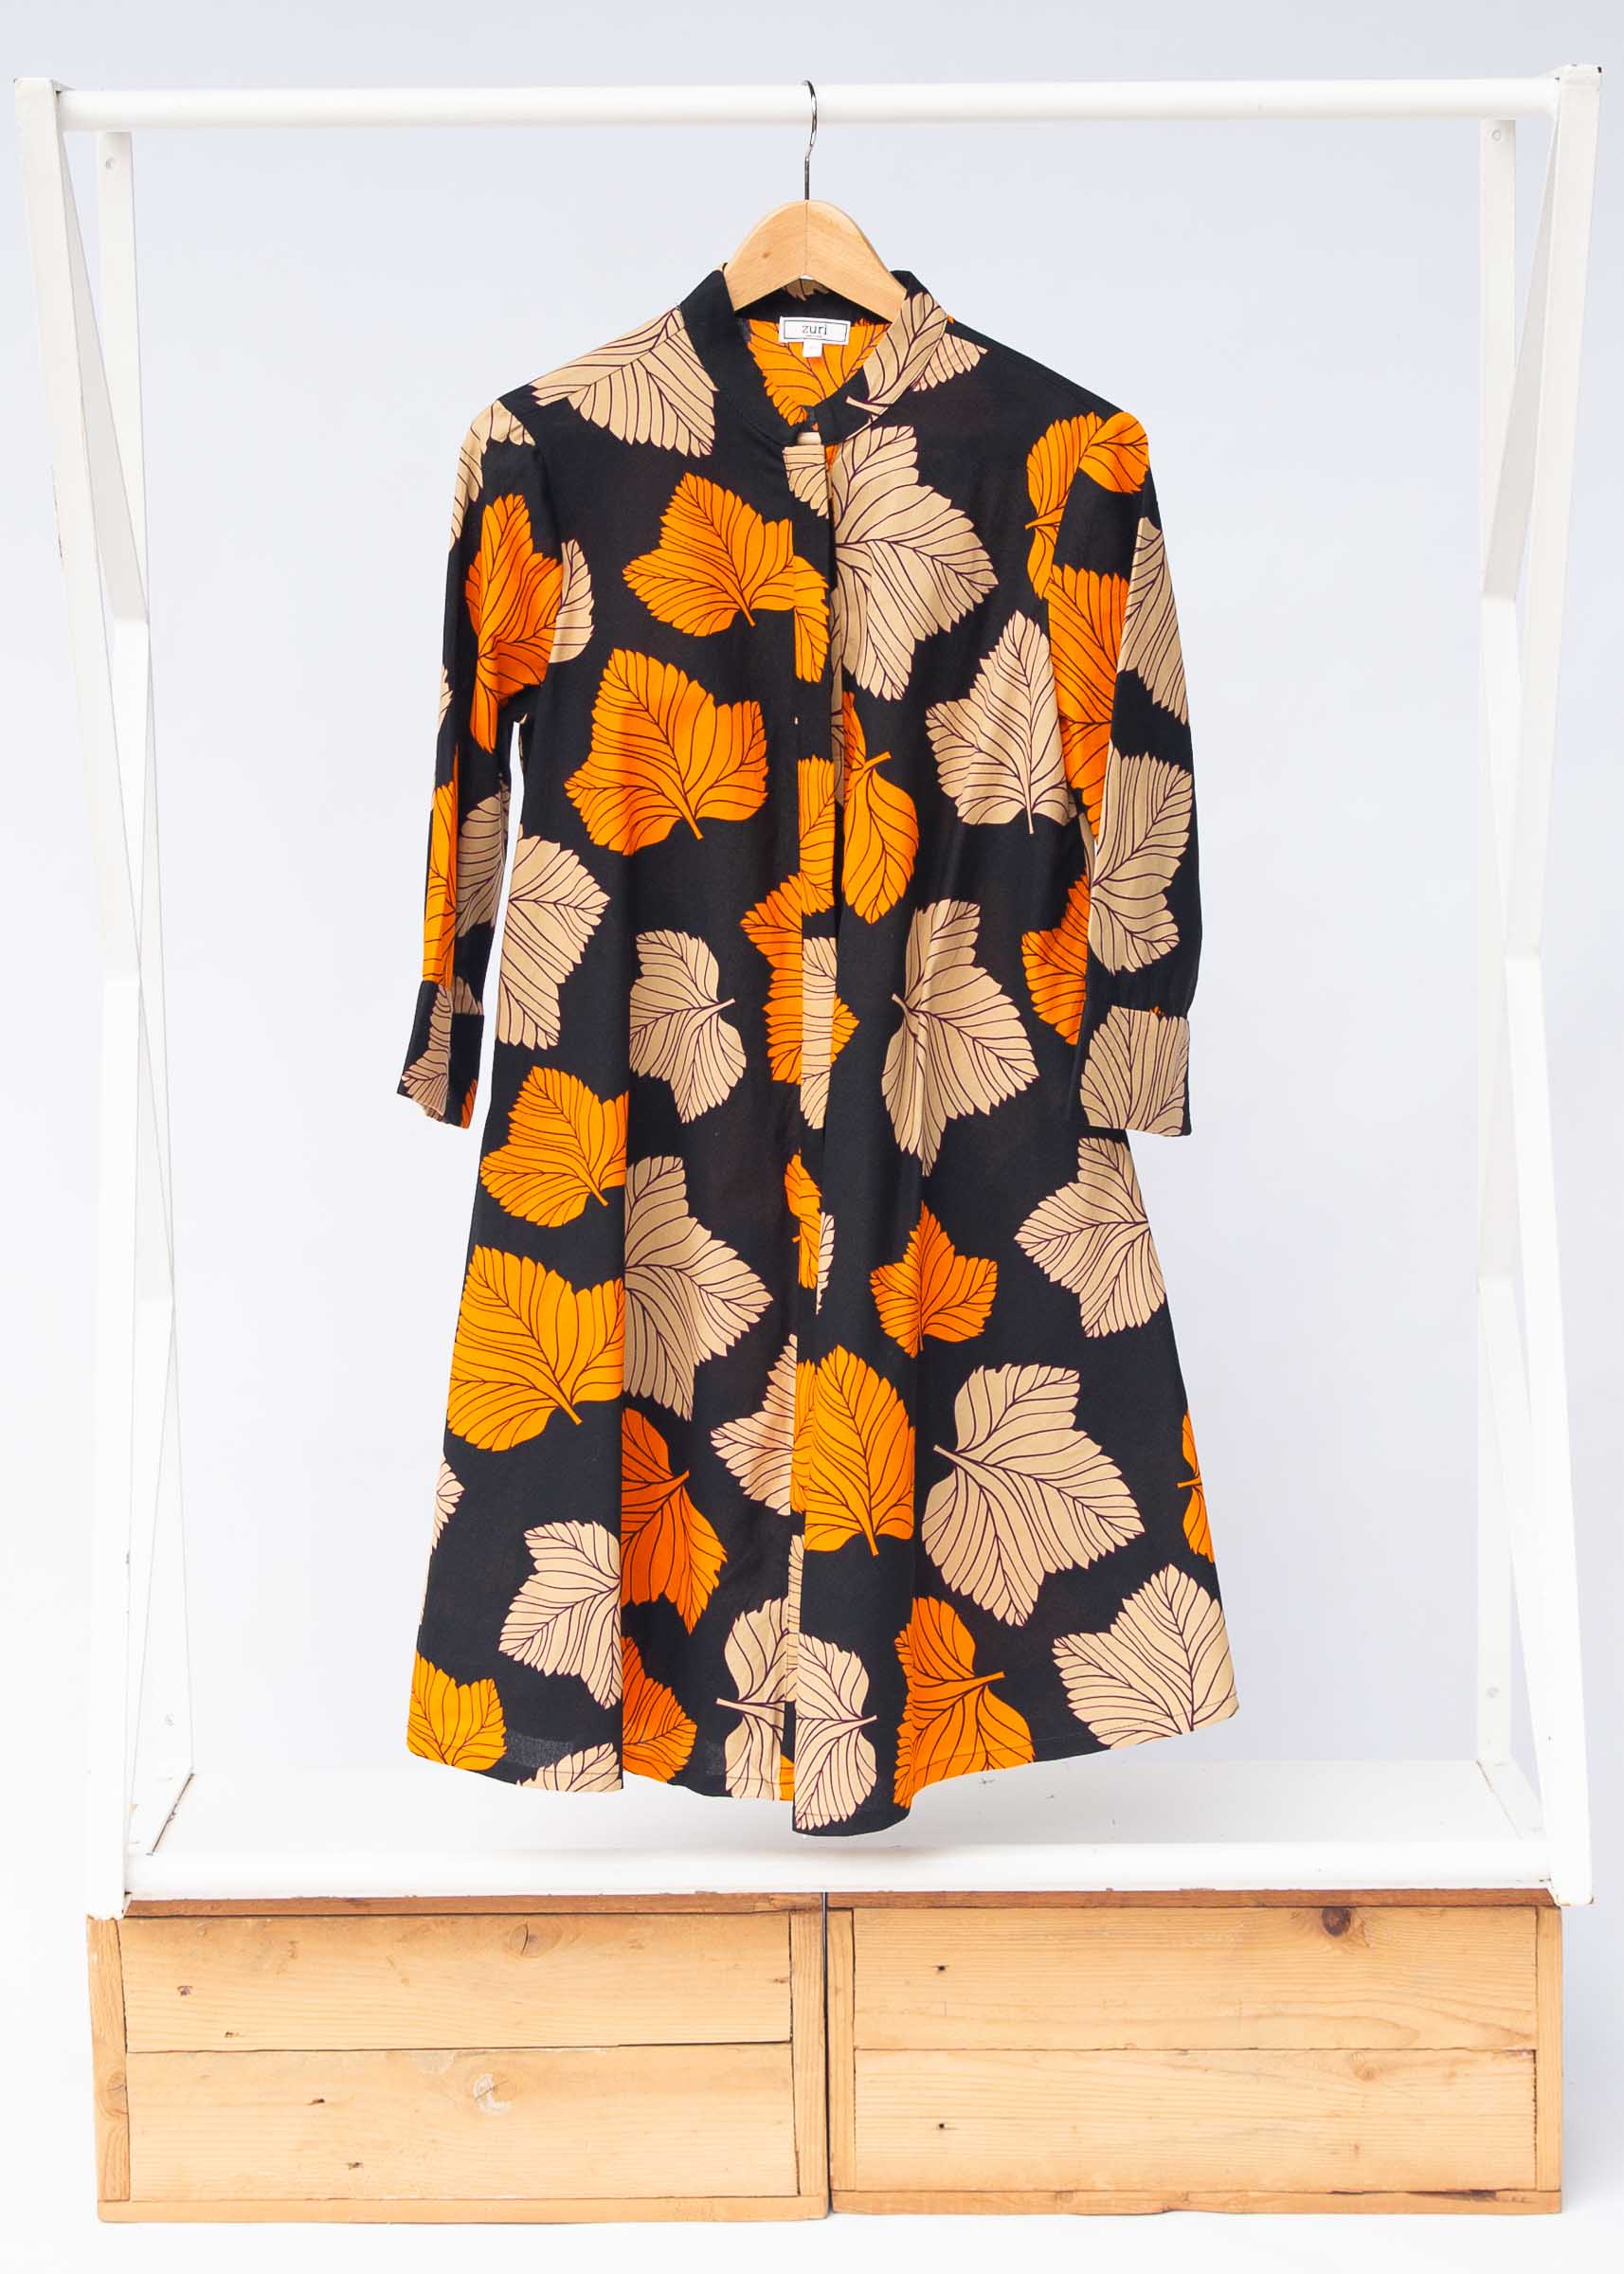 Display of orange, beige and black leaf print dress.